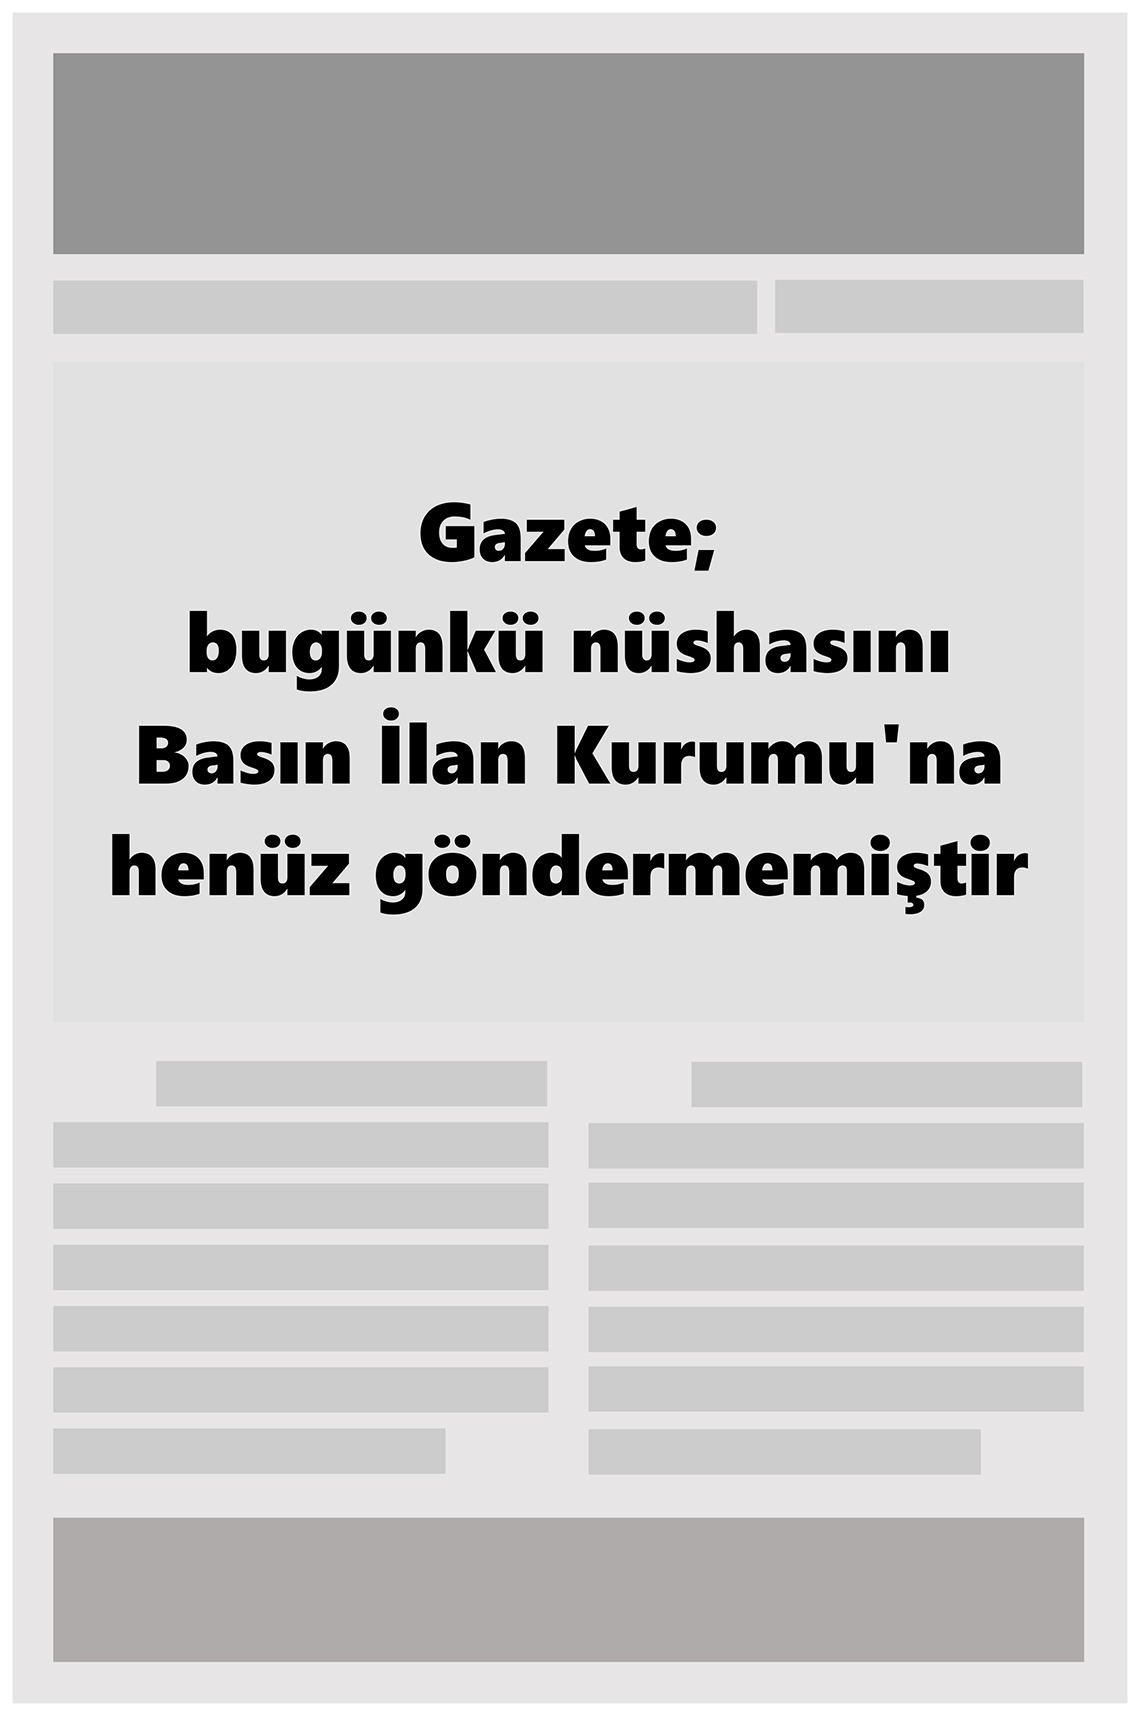 Derince Ekspres Gazete Manşeti